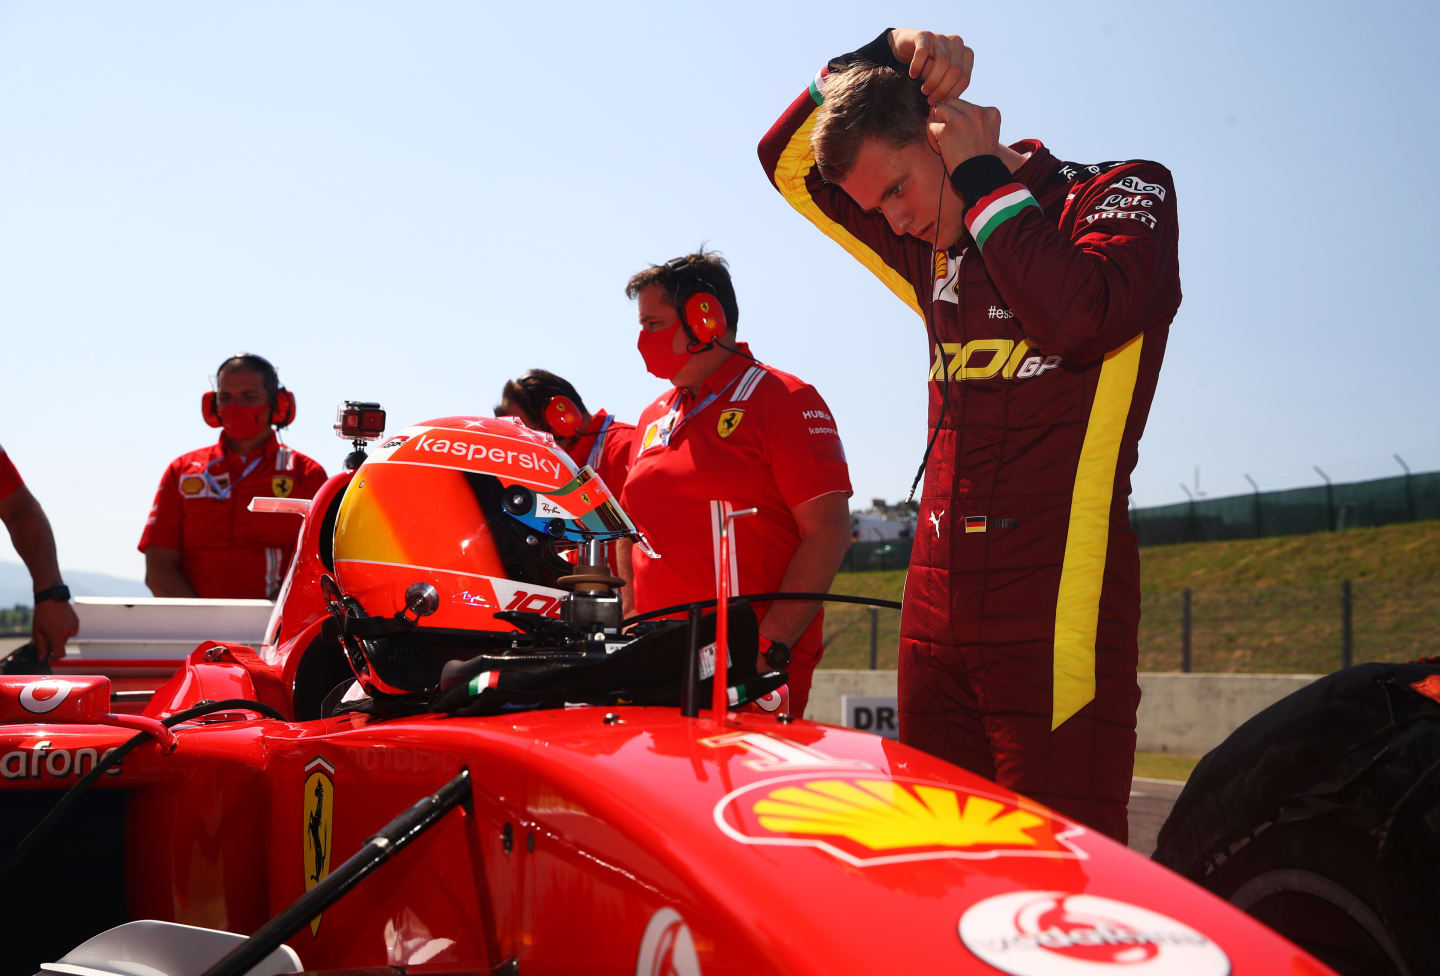 SCARPERIA, ITALY - SEPTEMBER 13: Mick Schumacher of Germany prepares to drive the Ferrari F2004 of